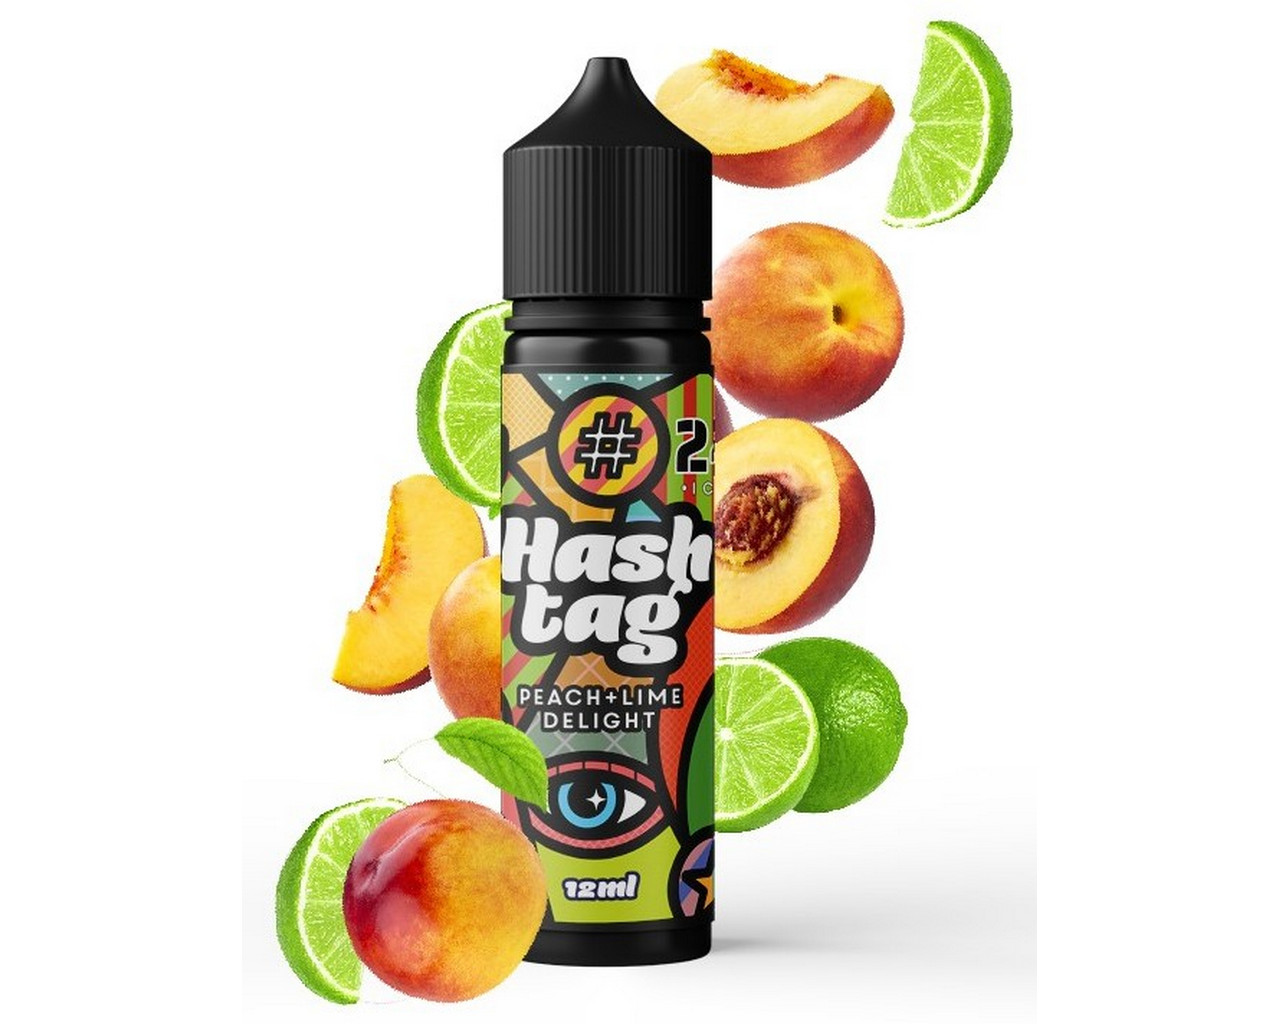 Hashtag Flavorshot Peach & Lime Delight Ice 12/60ml